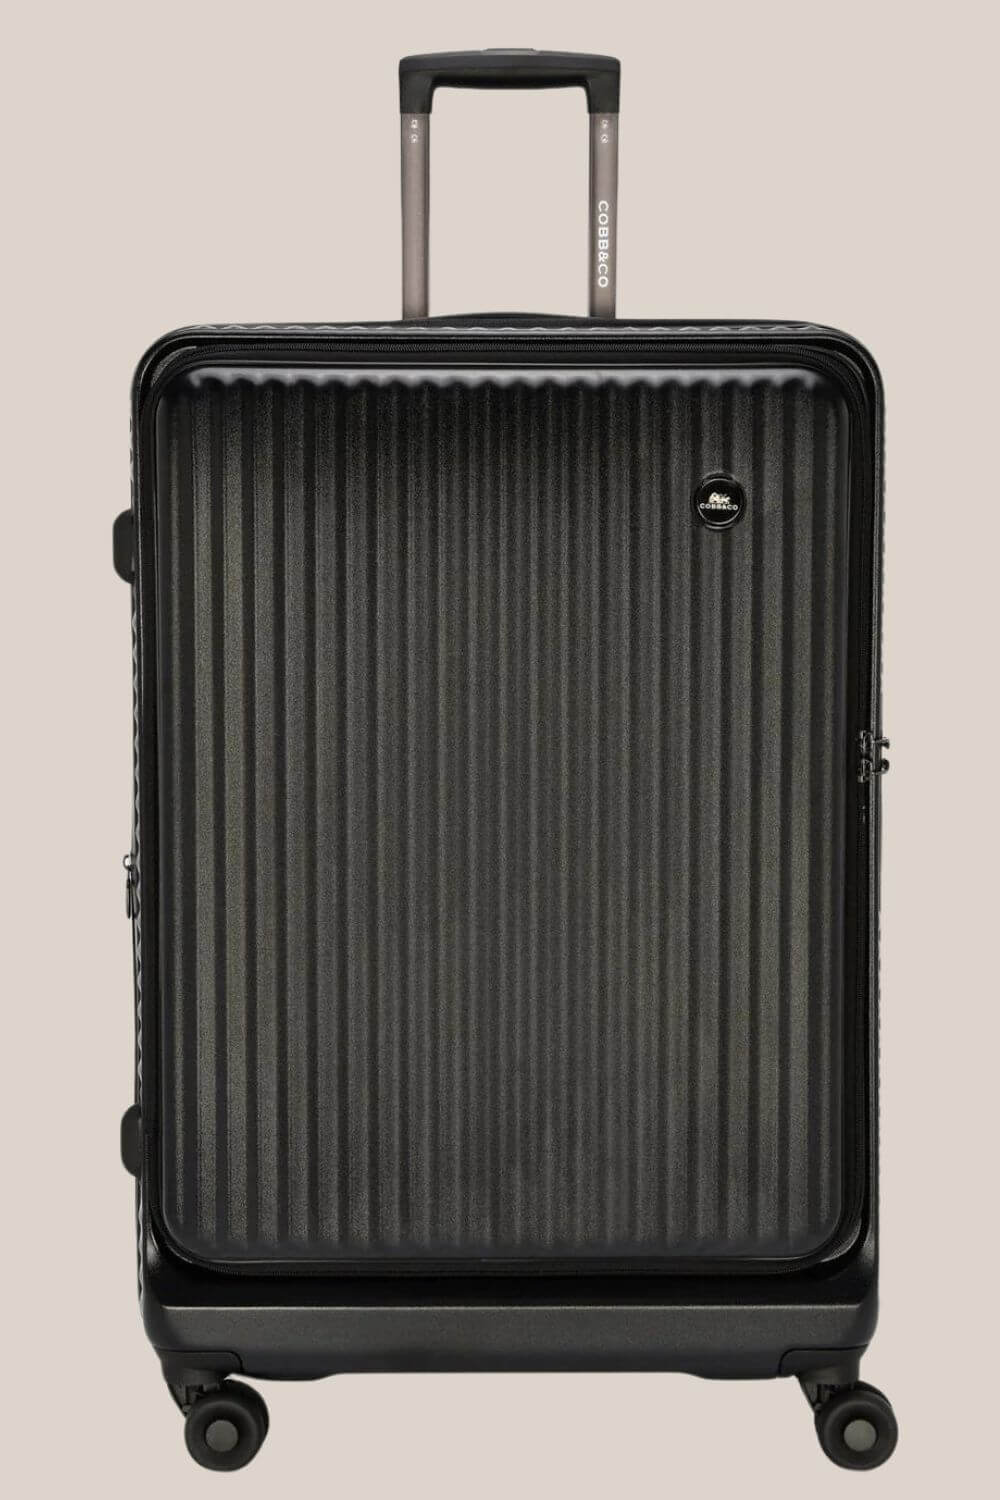 Cobb & Co Canberra Small Hardcase Suitcase 55cm